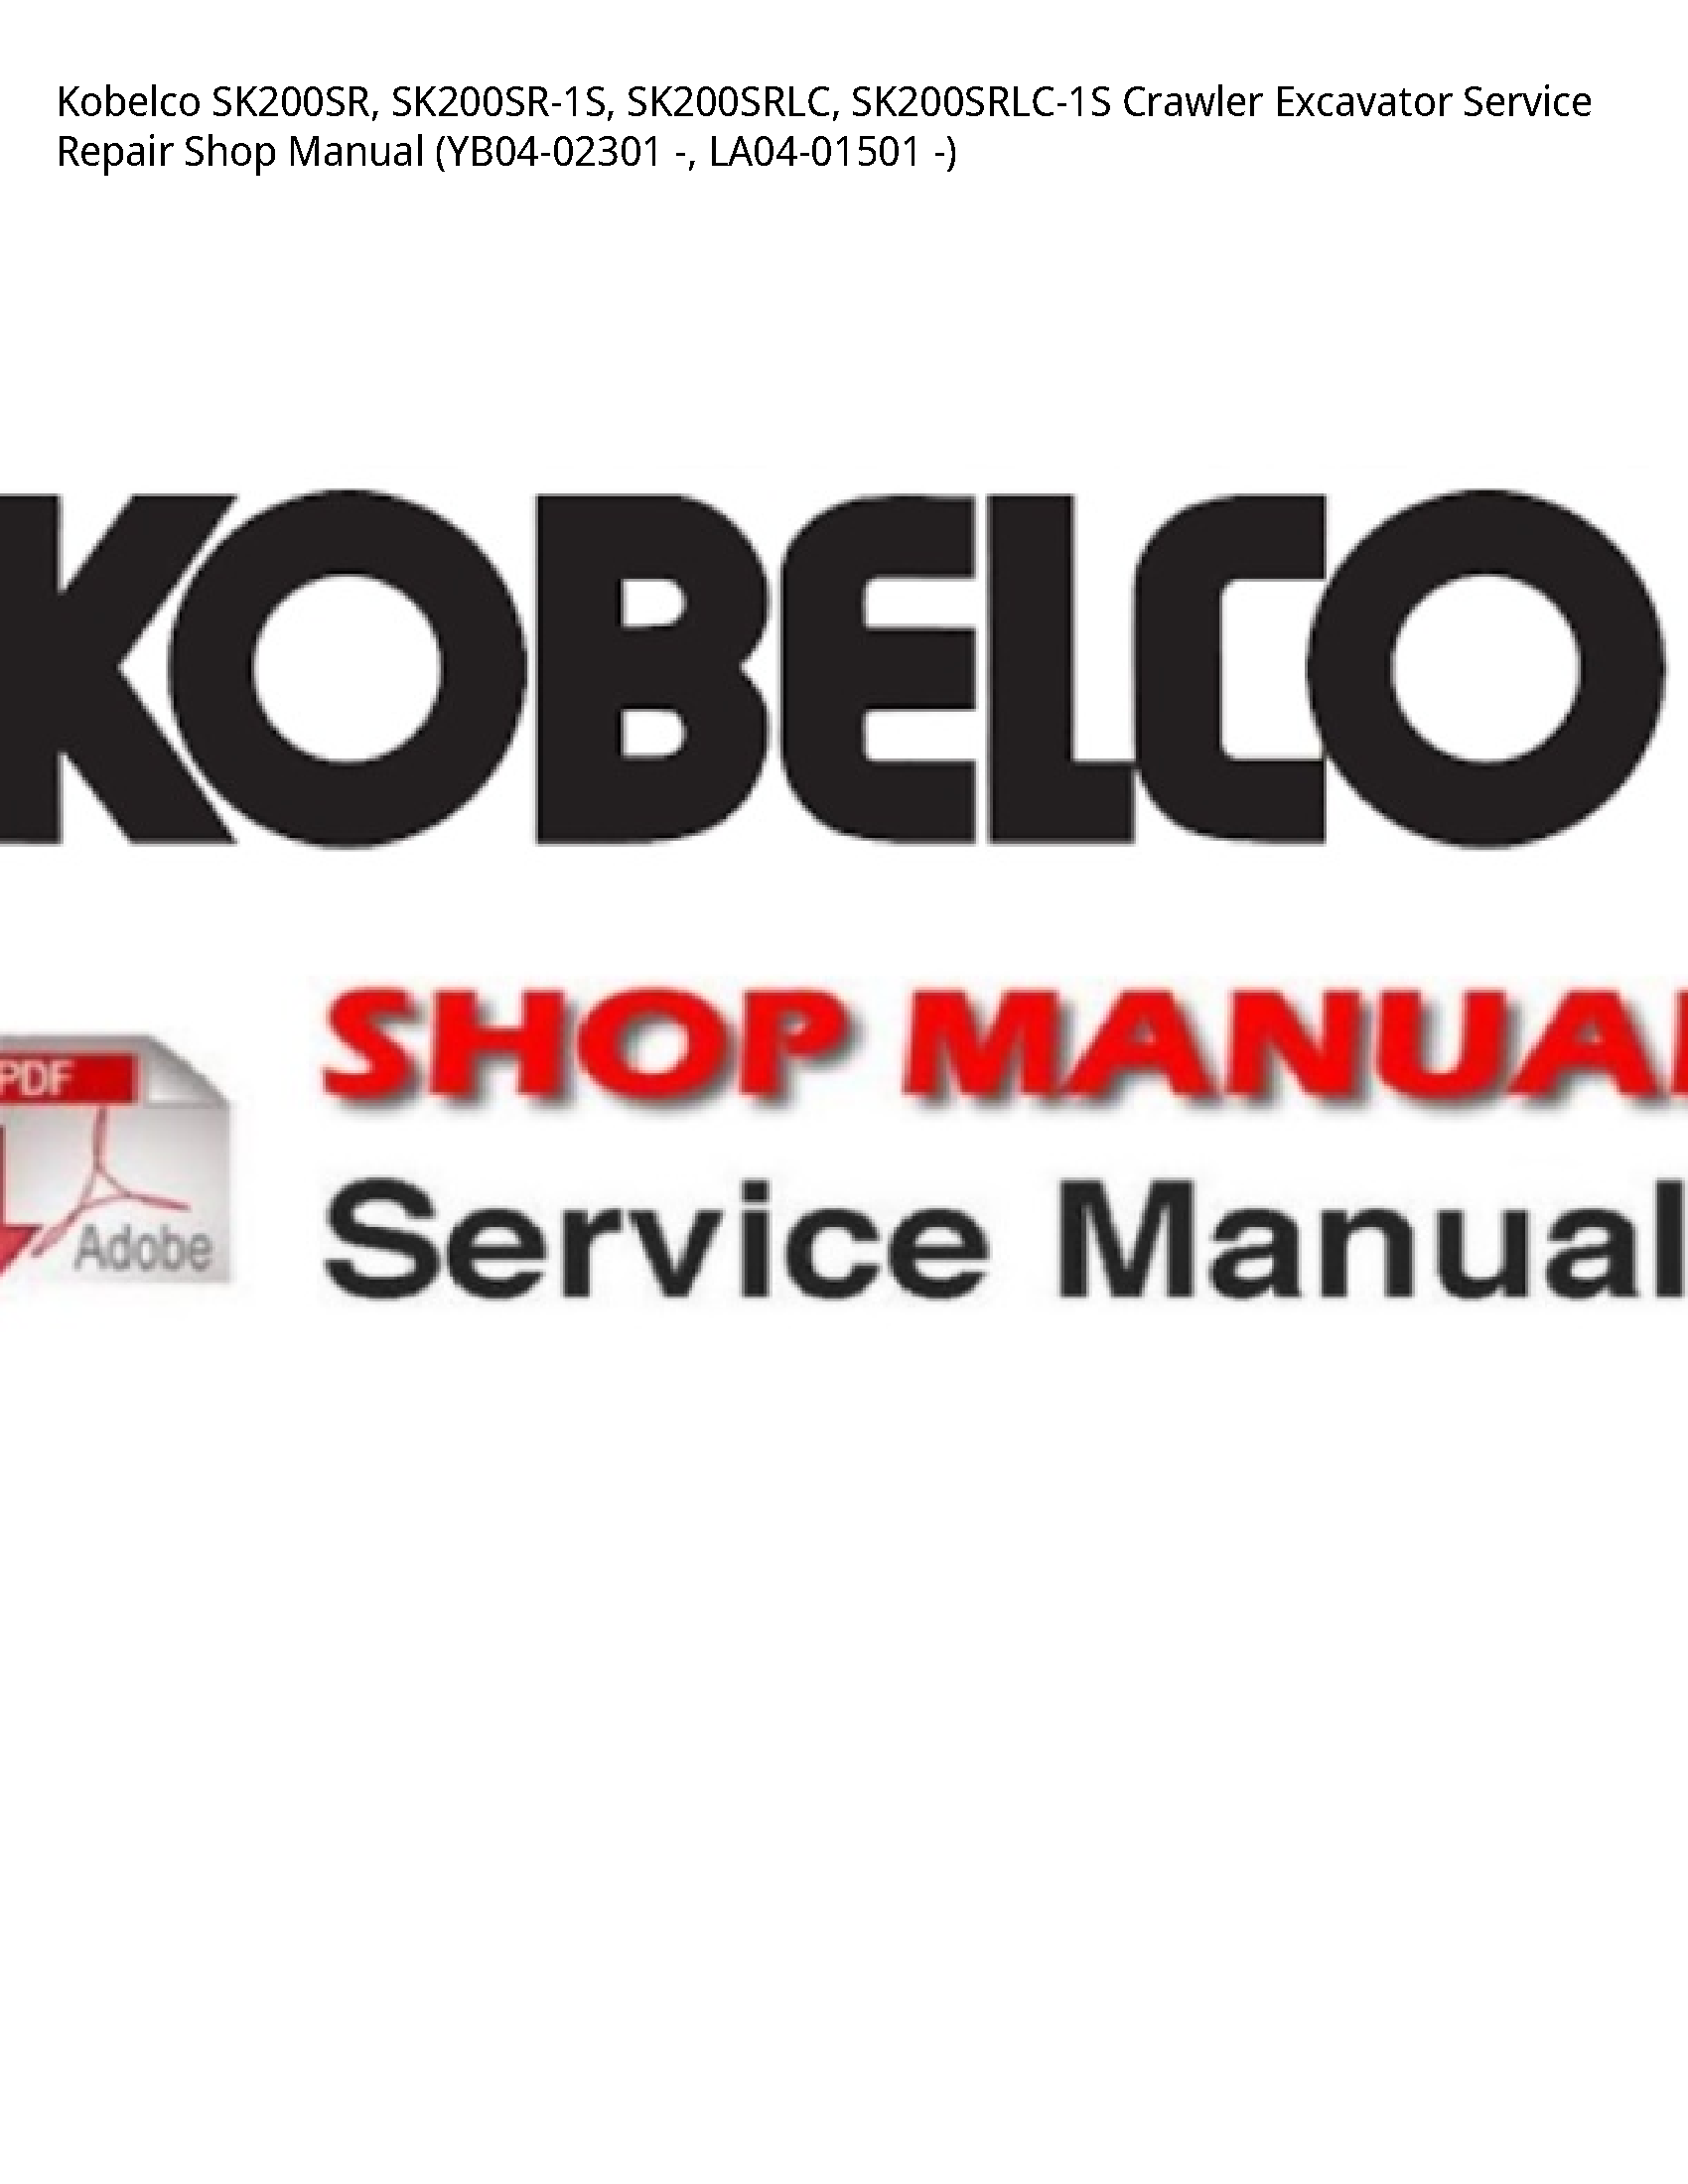 Kobelco SK200SR Crawler Excavator manual